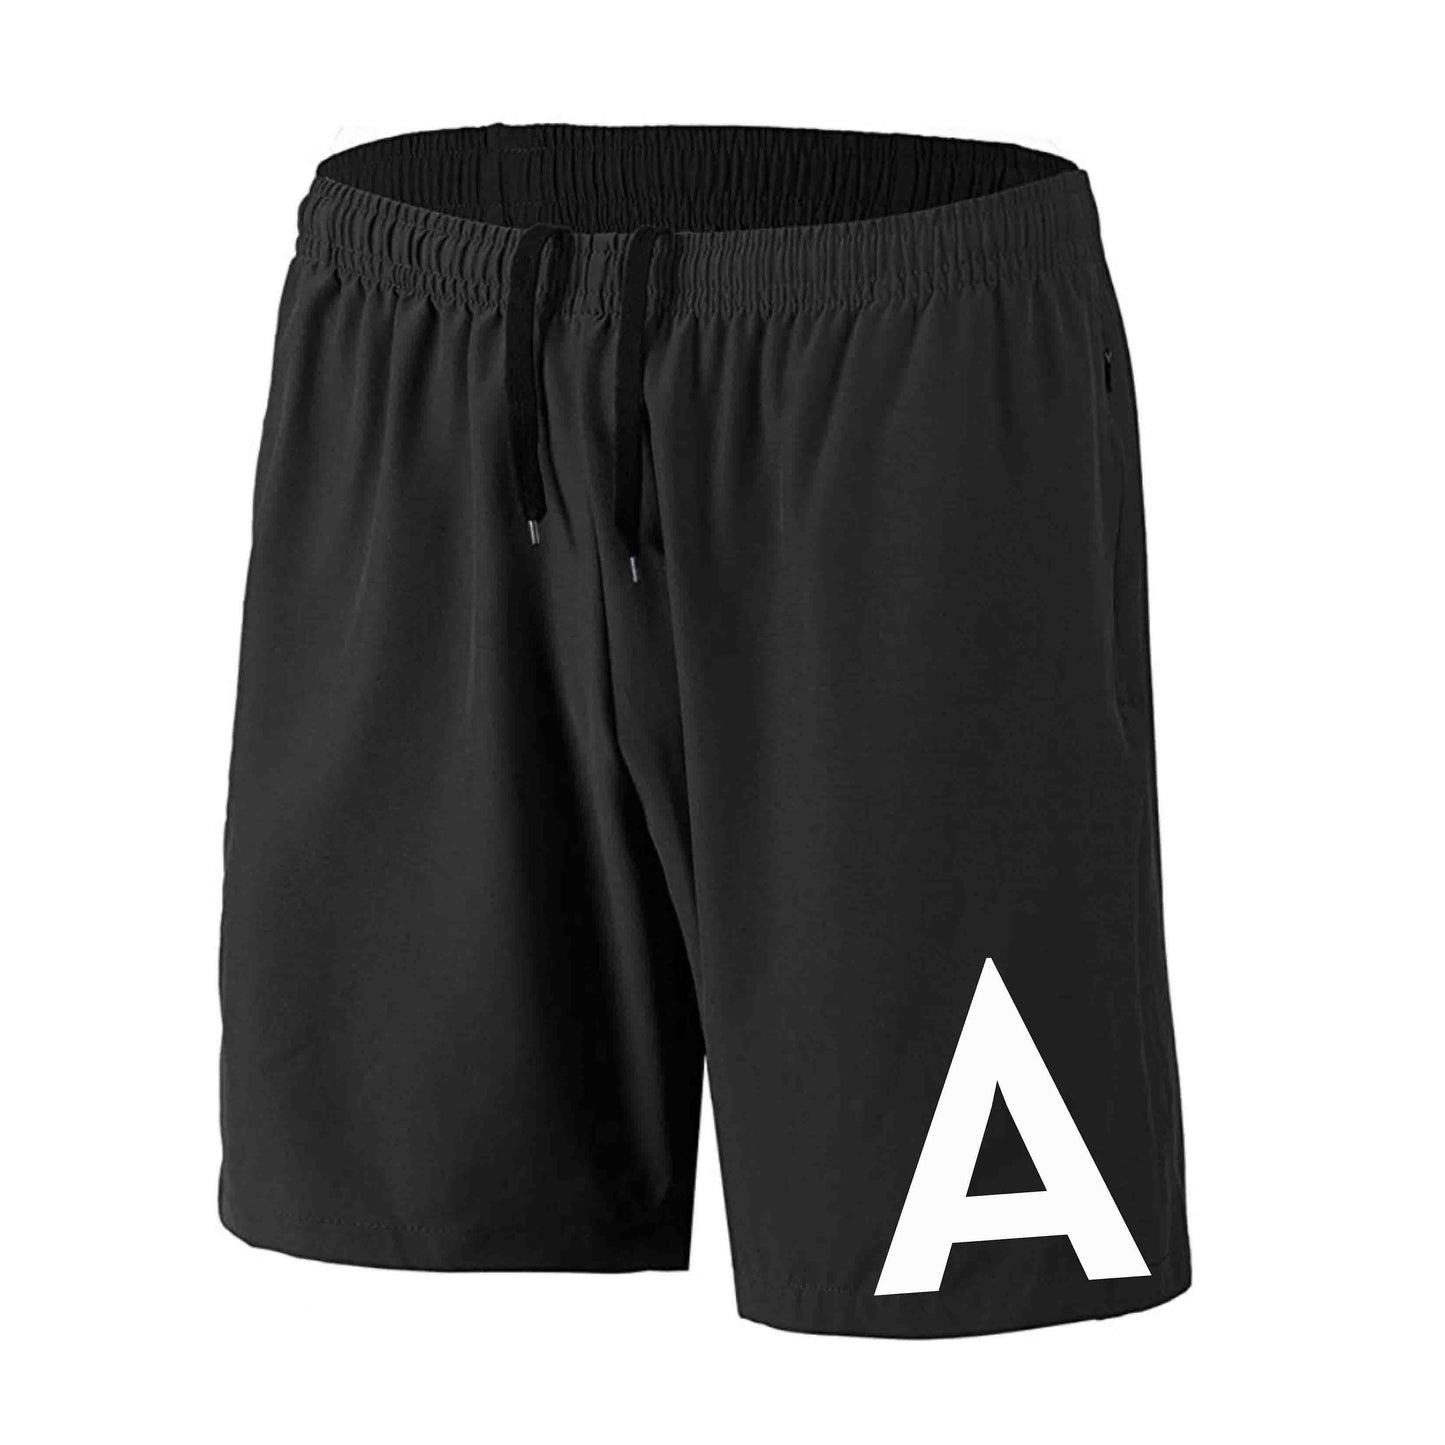 Nutcase Personalized Boy Casual Shorts for Black with Pocket Men Monogram Nutcase